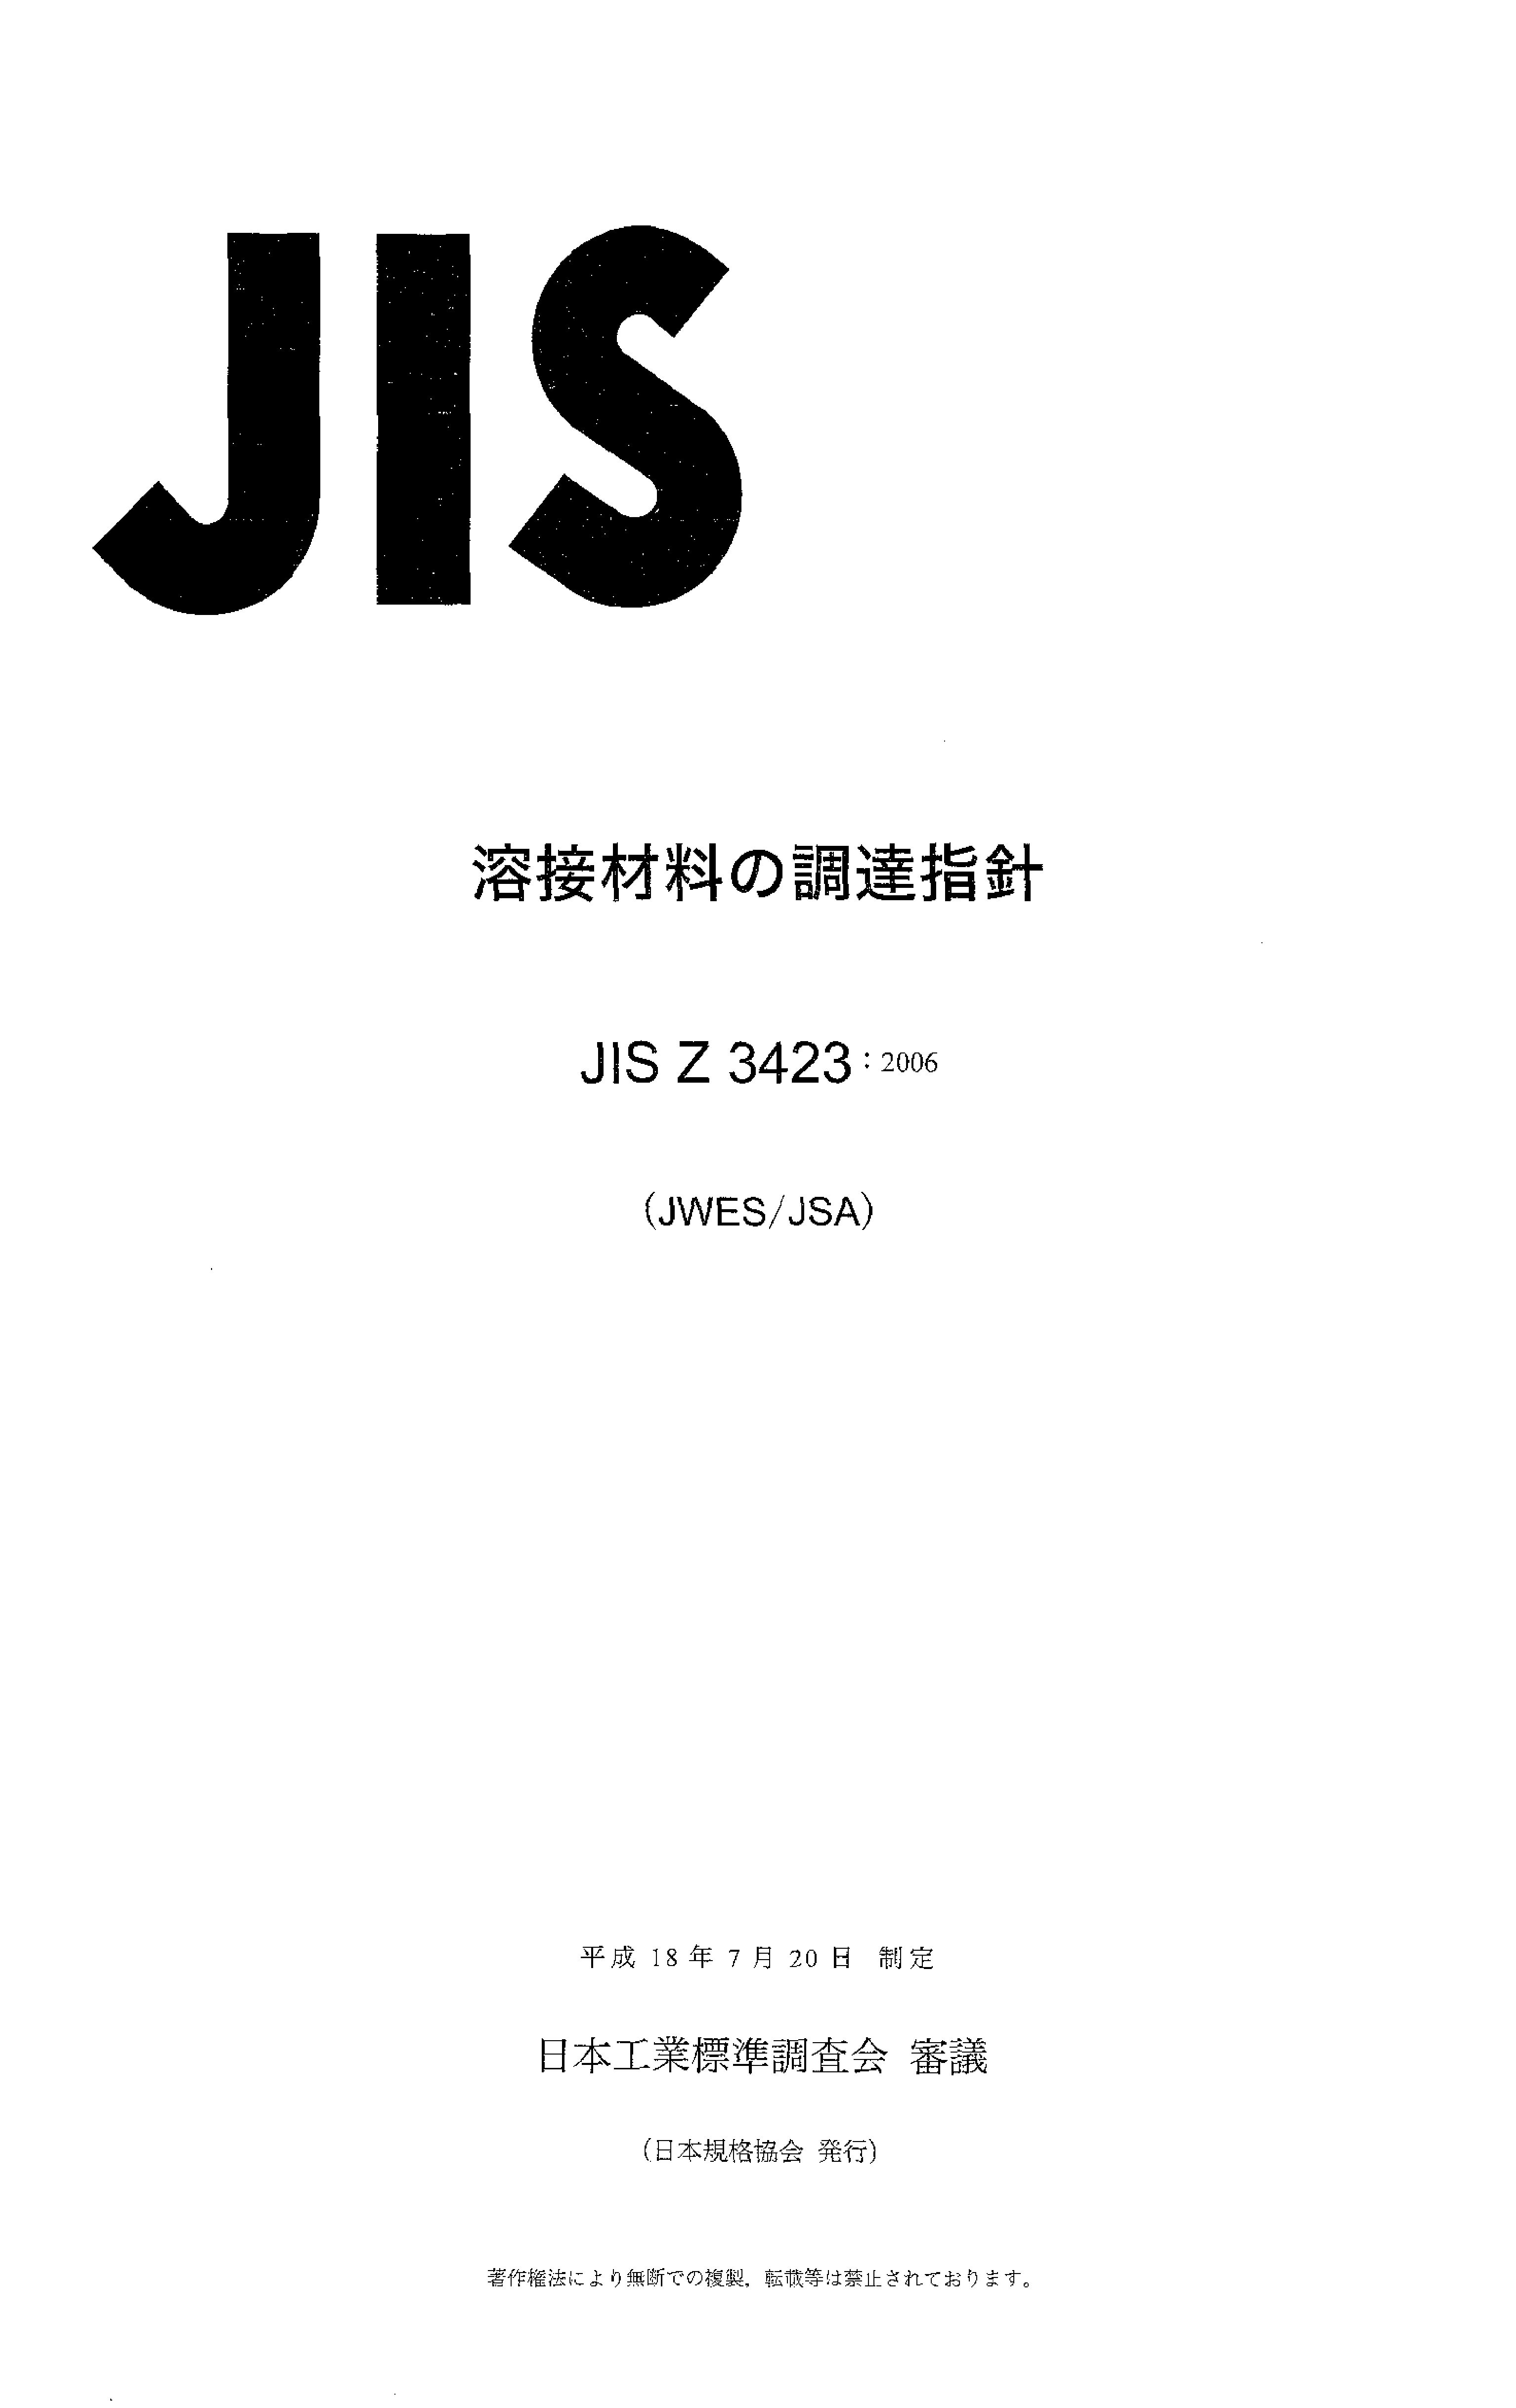 JIS Z 3423:2006封面图